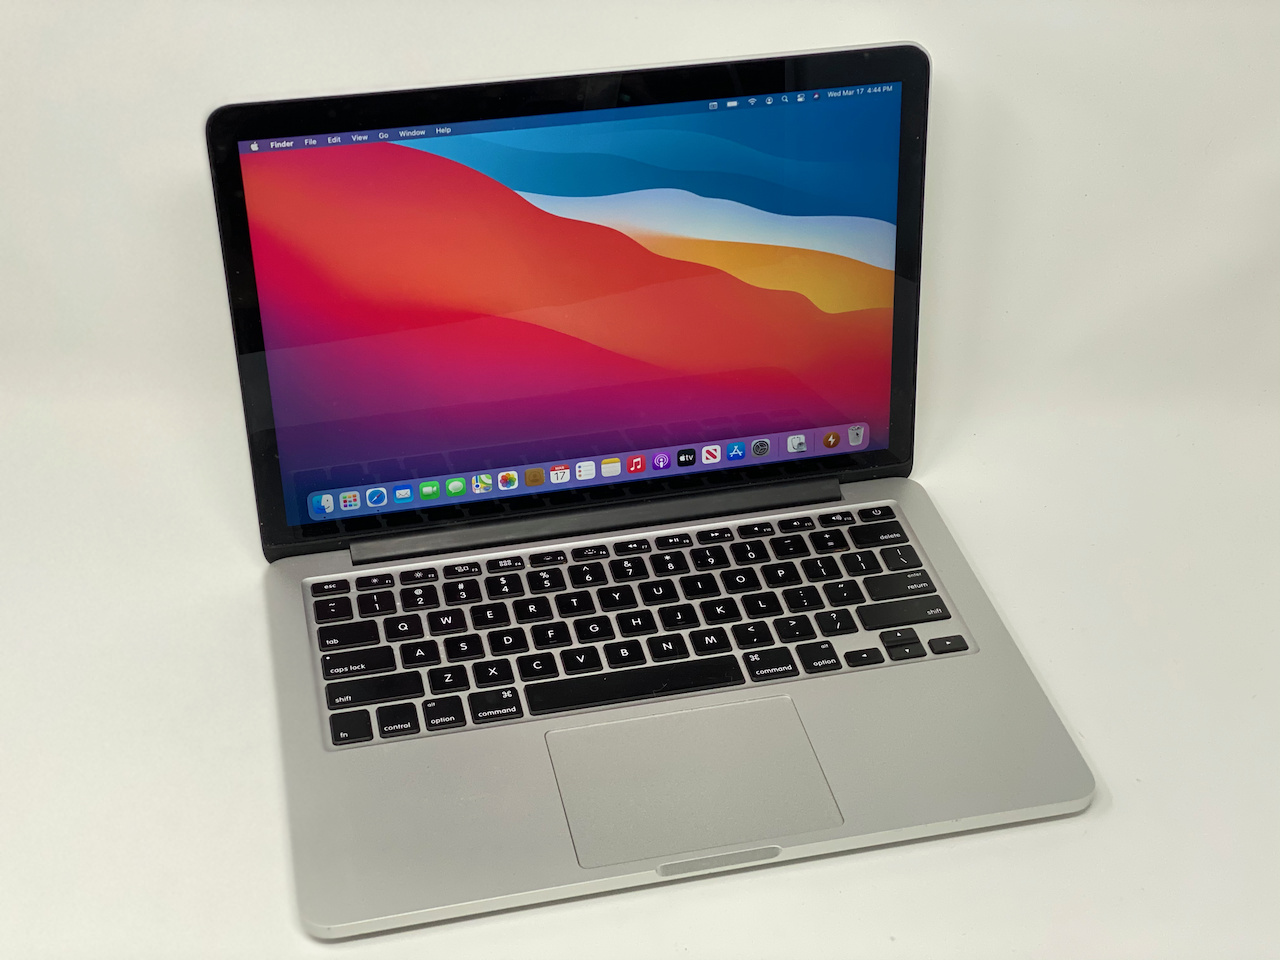 Apple MacBook Pro (Retina, 13-inch, Late 2013) Silver, 4GB RAM